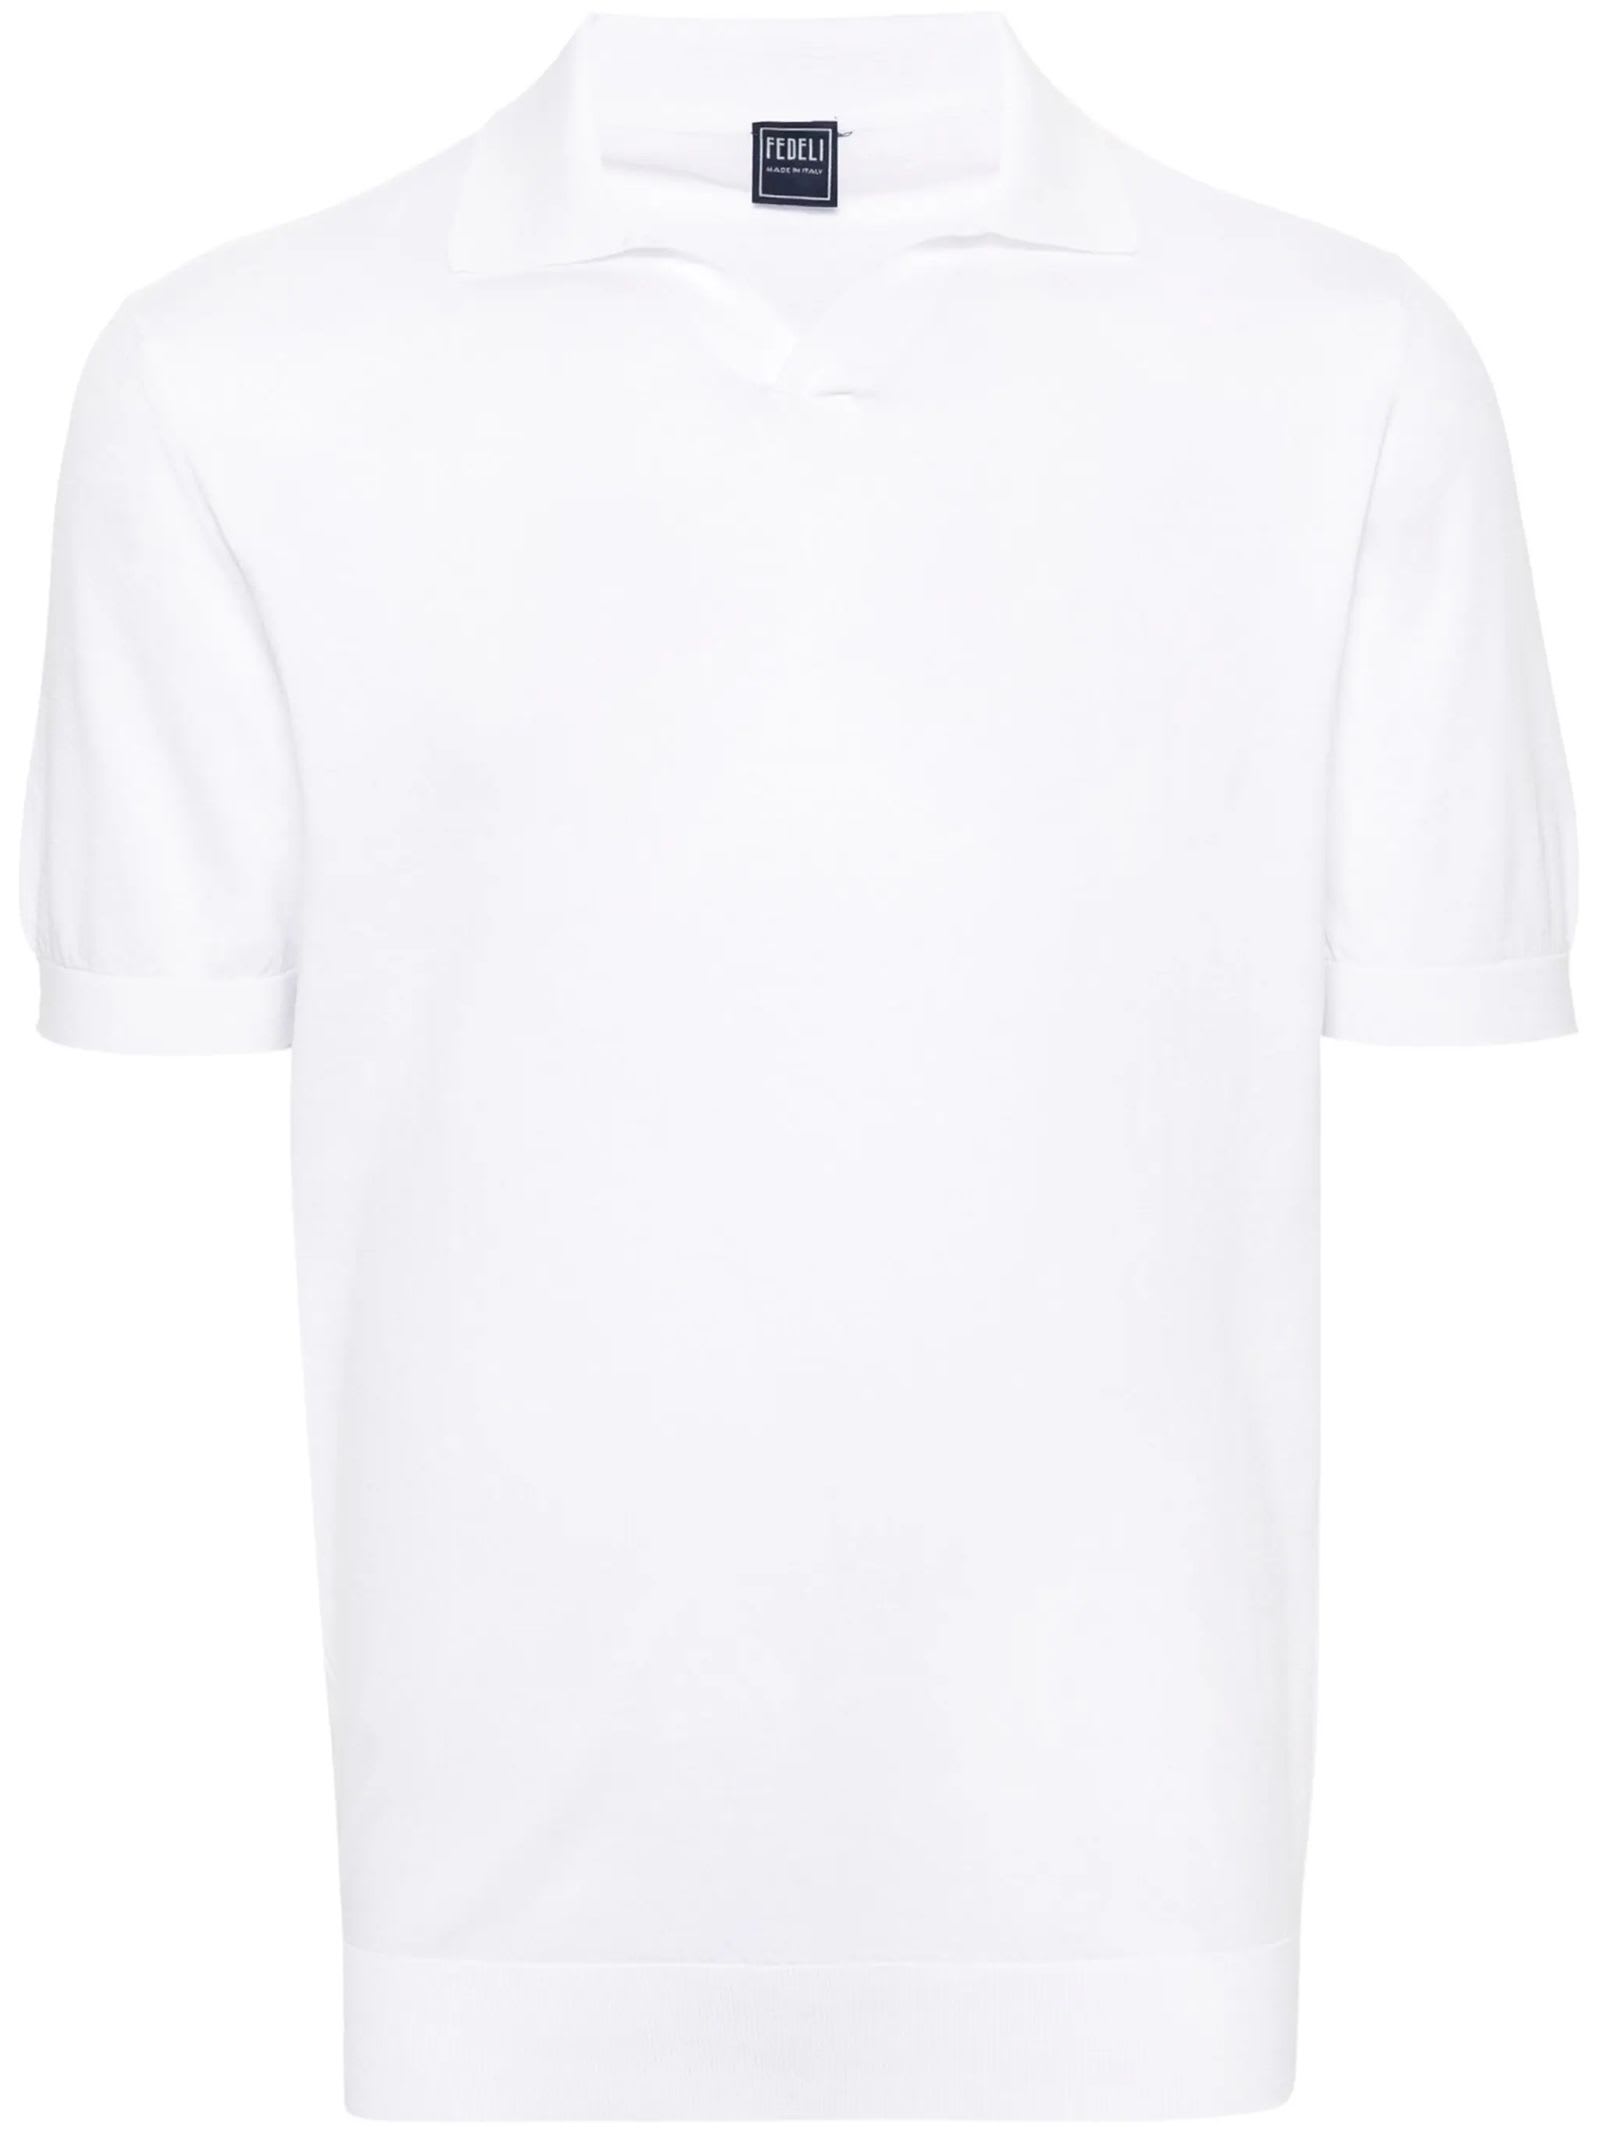 Fuji Cotton Polo Shirt